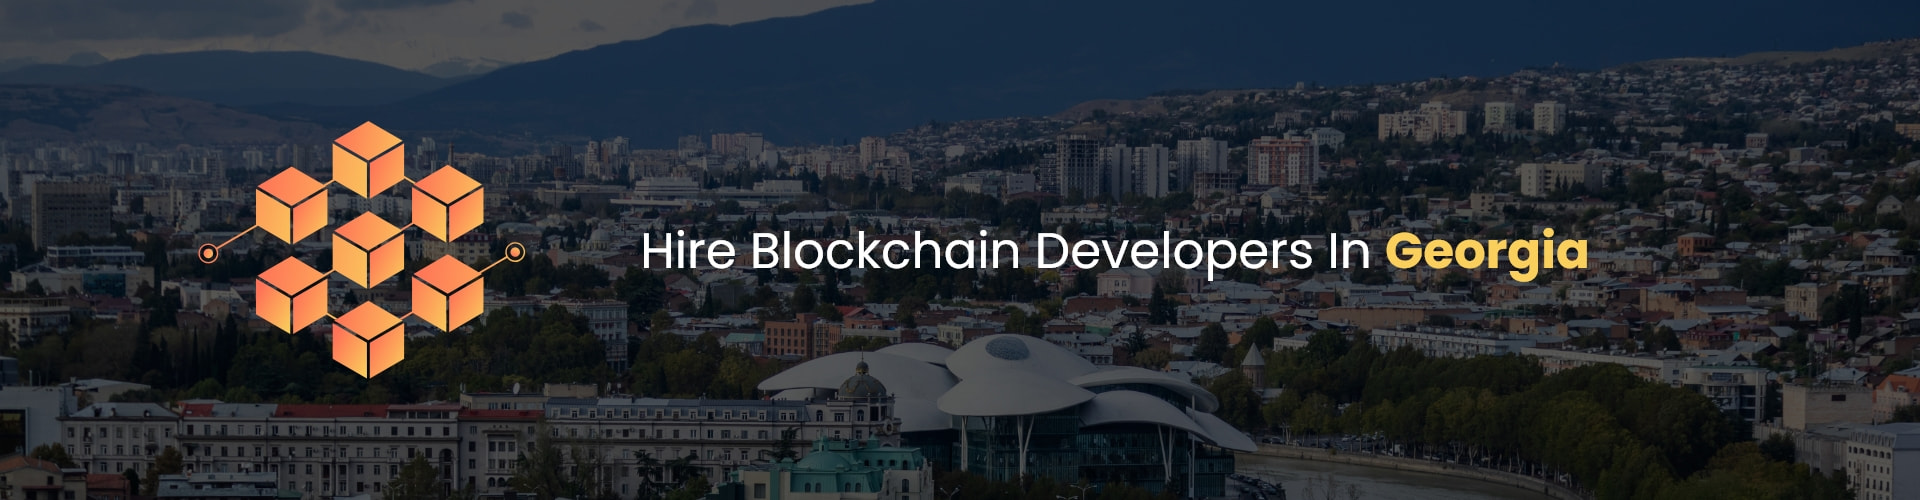 hire blockchain developers in georgia